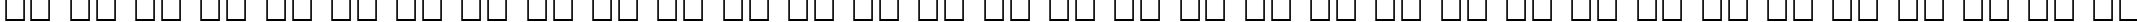 Пример написания русского алфавита шрифтом Aparajita Bold Italic